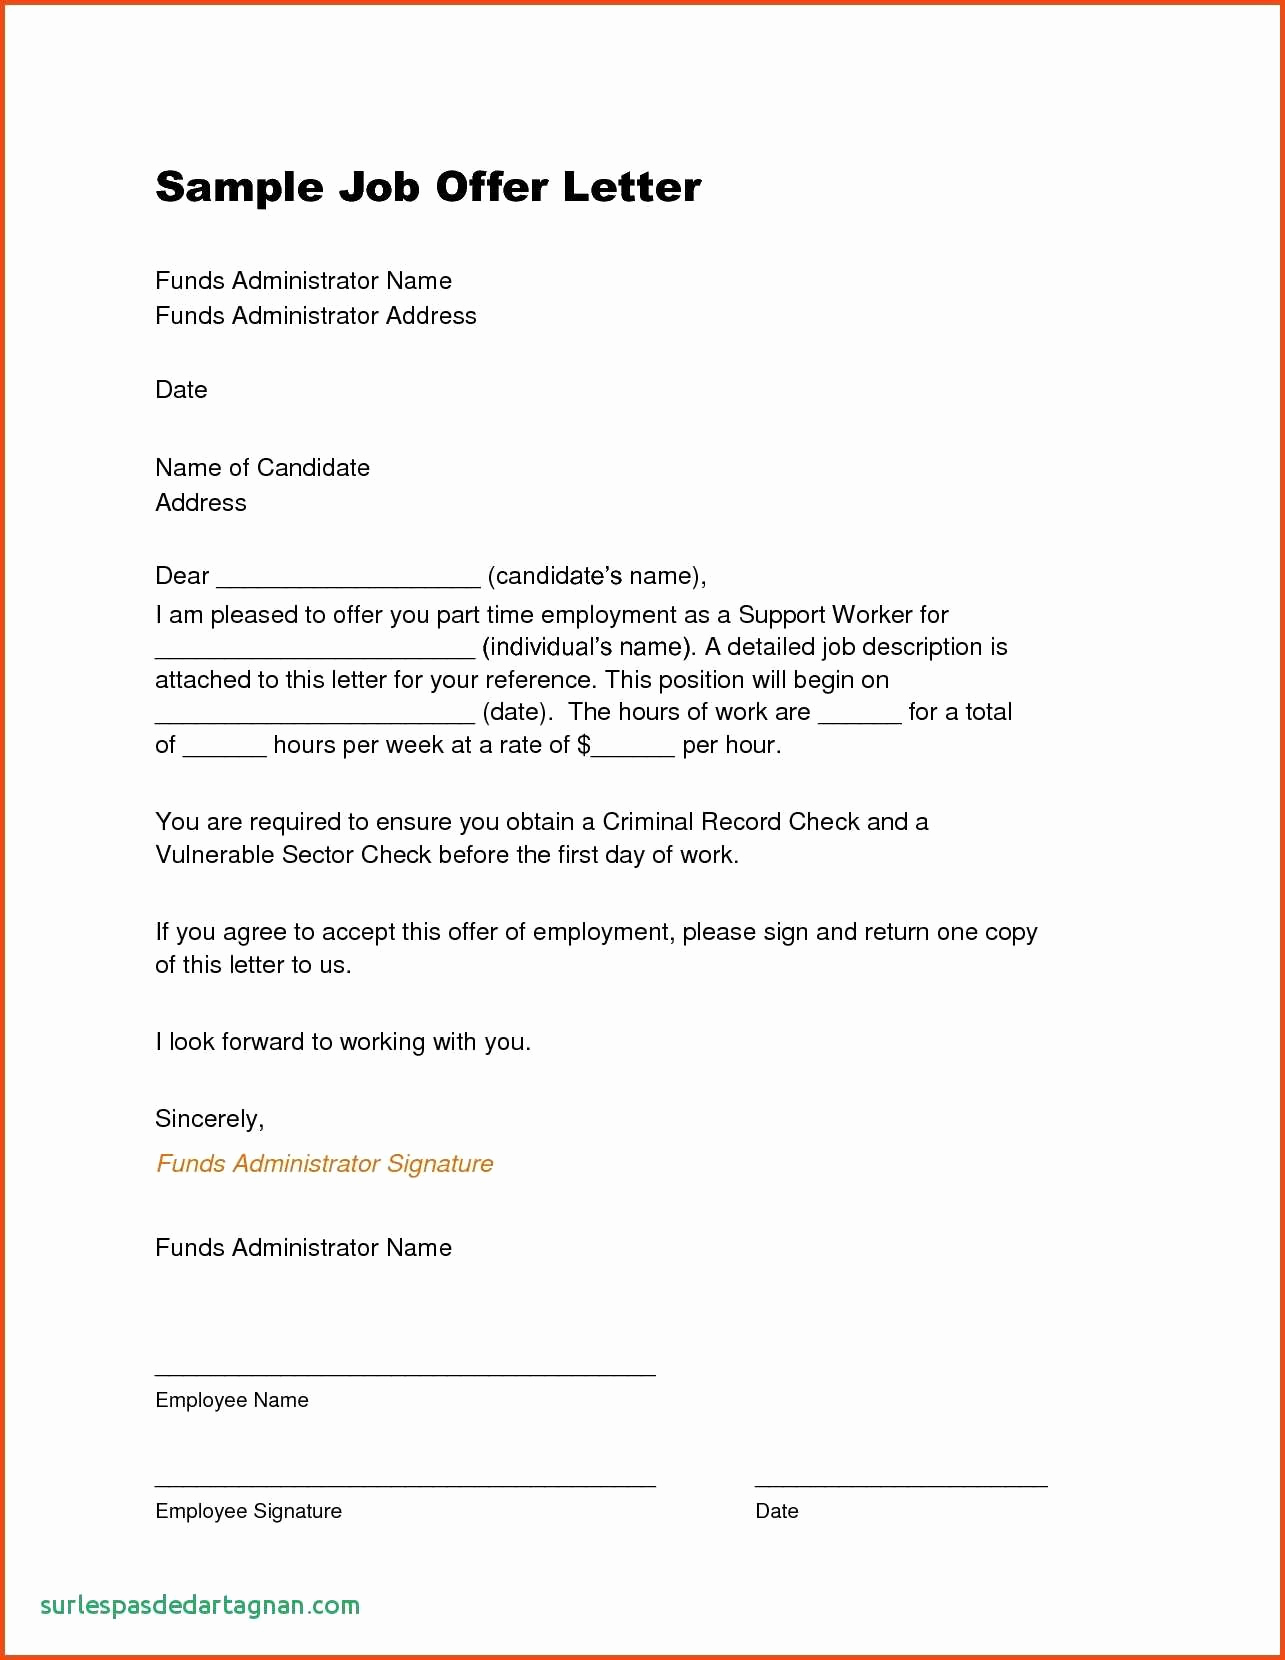 Sample Job Offer Letter Beautiful Fer Employment Letter Template Canada Sample